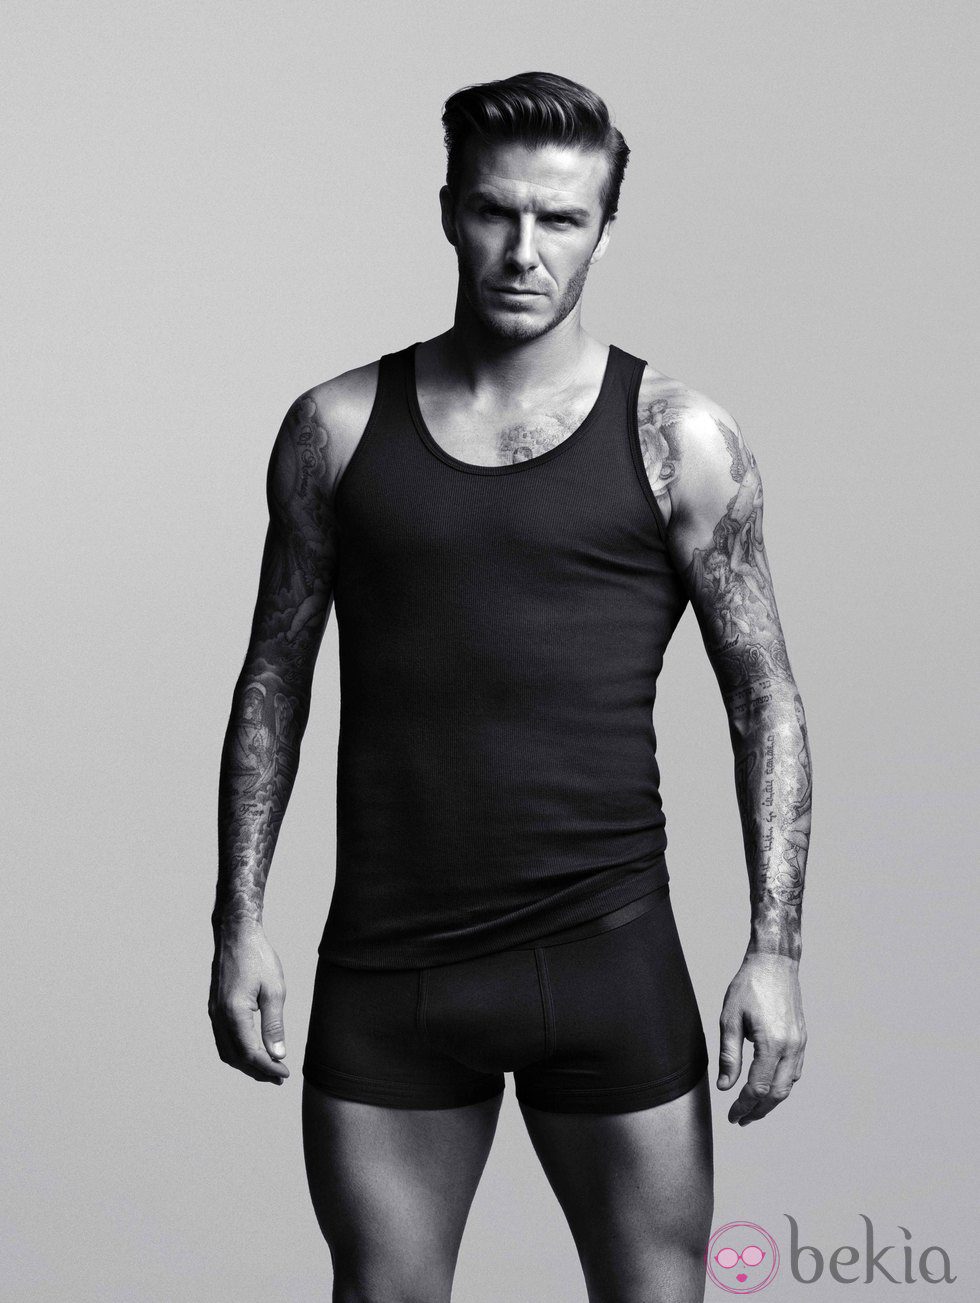 David Beckham con camiseta de tirantes negra